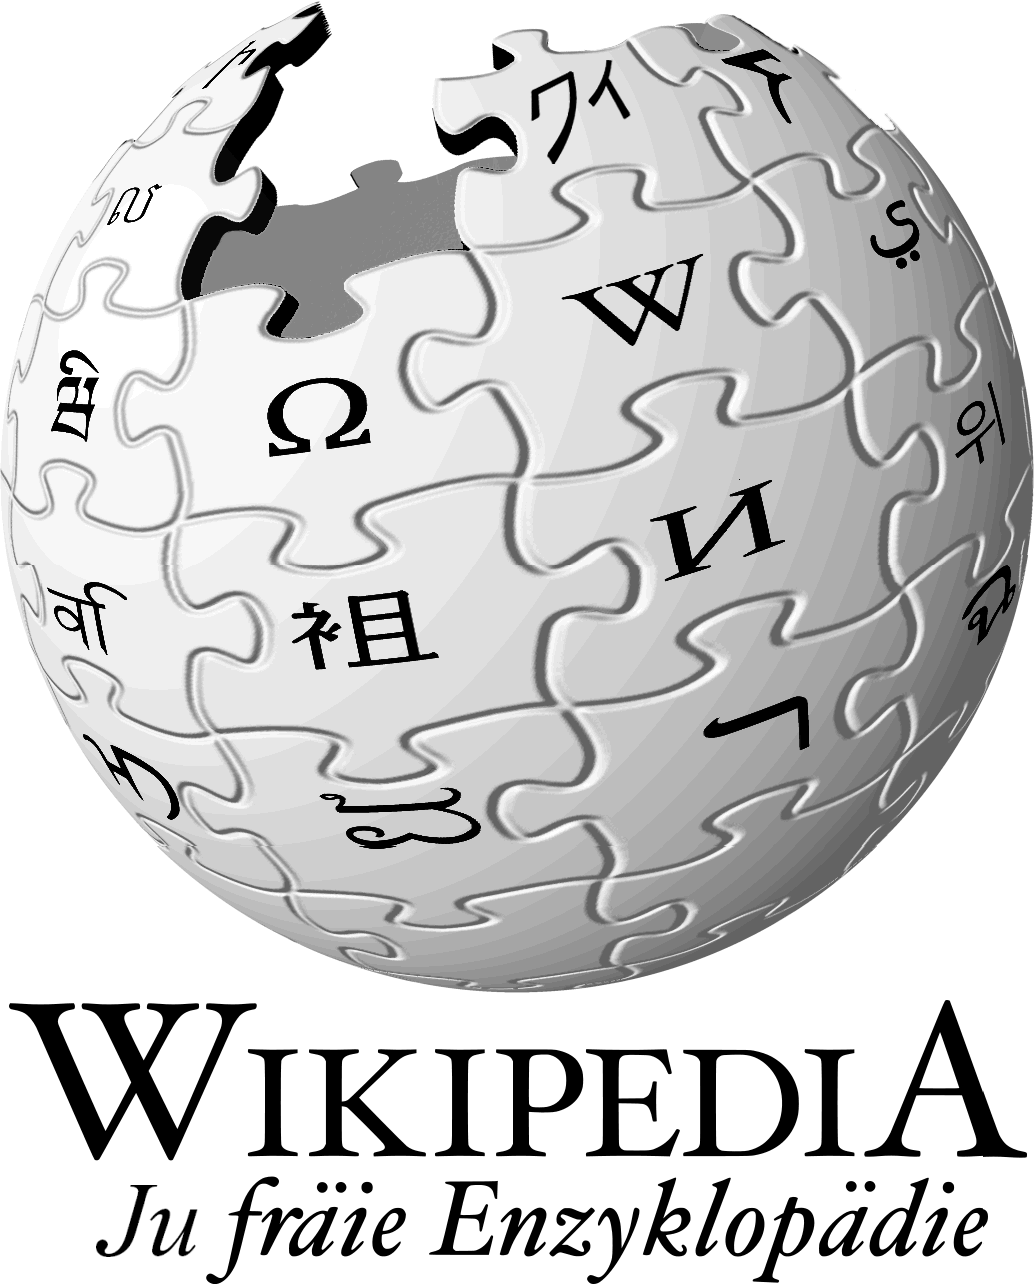 File:Wikipedia Groot.png - Wikimedia Commons